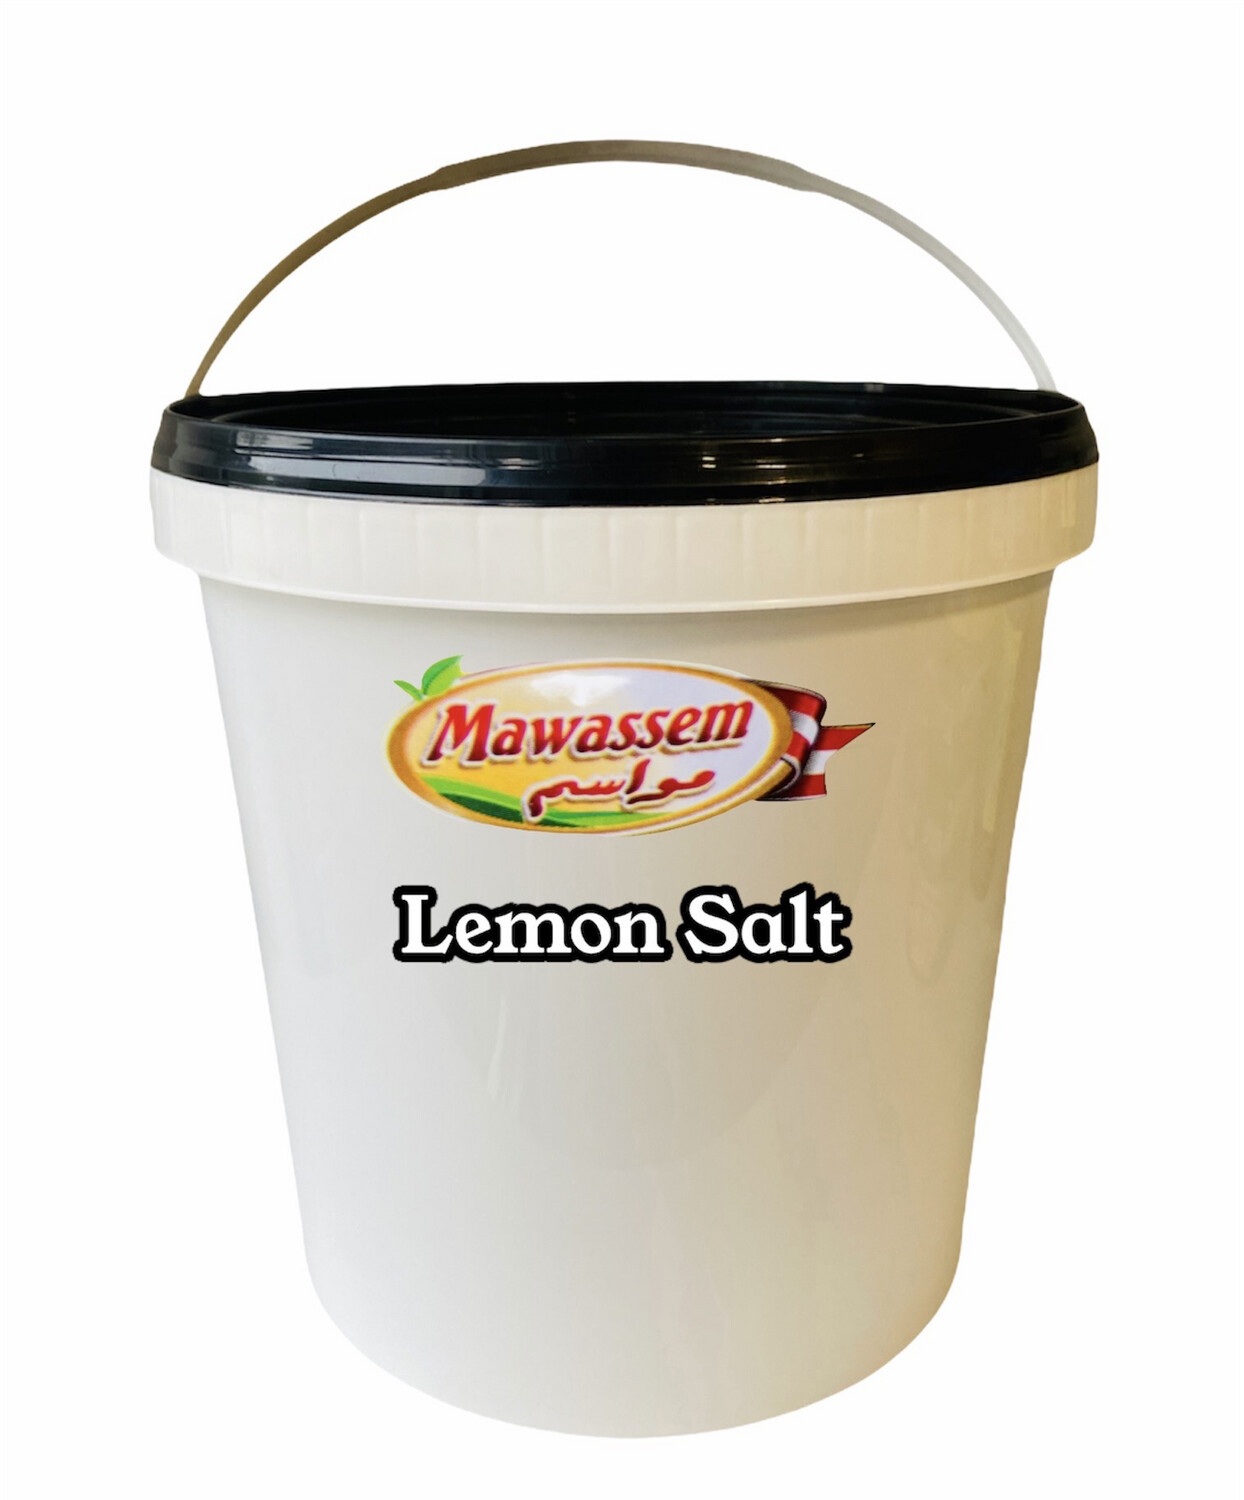 Mawassem 5lb Lemon Salt